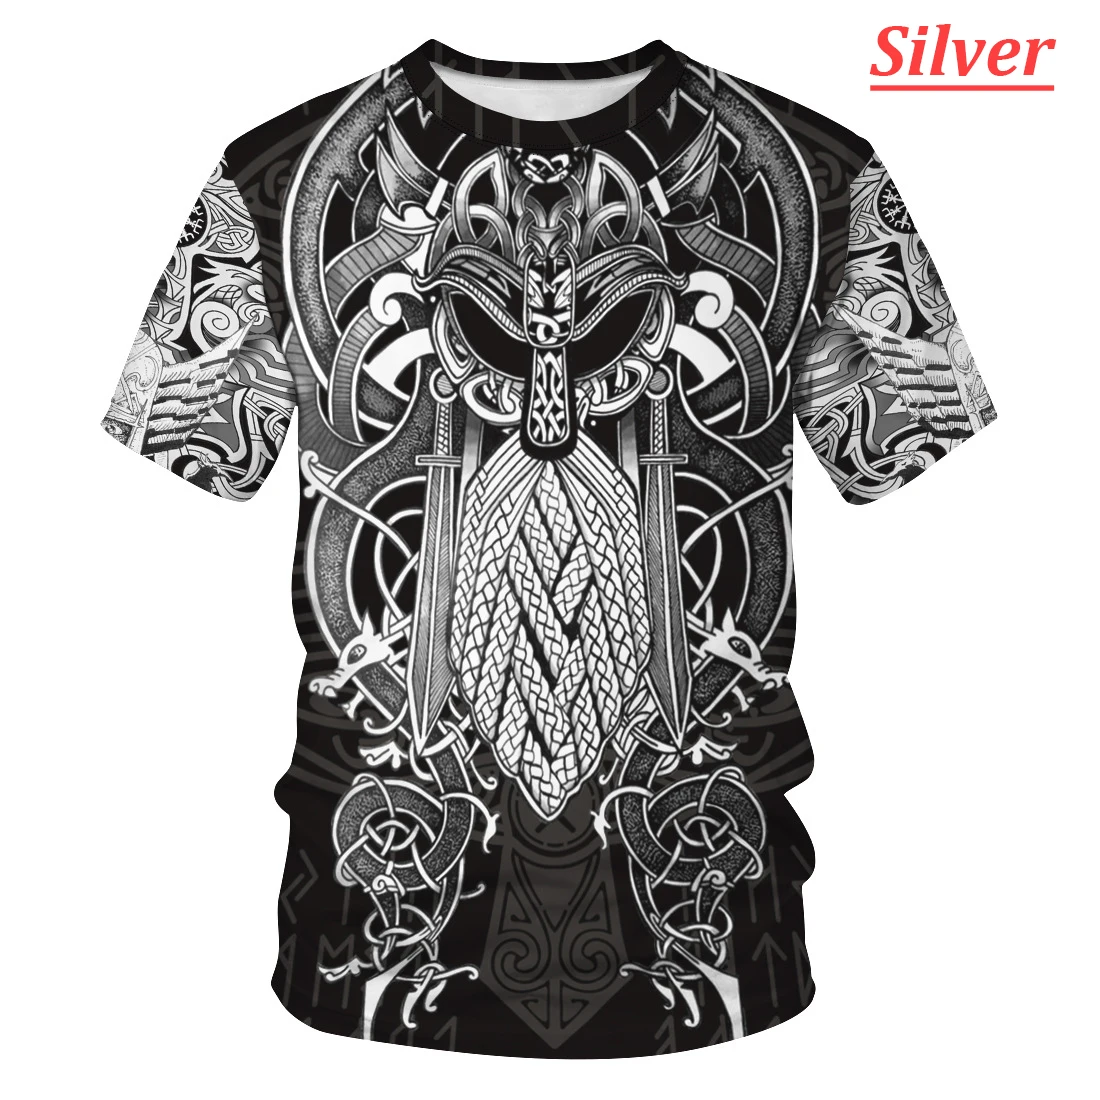 

Men's Fashion T shirt 3d Printing Viking Tattoo T-shirt Unisex Popular cool oversized t shirt Breathable Casual shirt